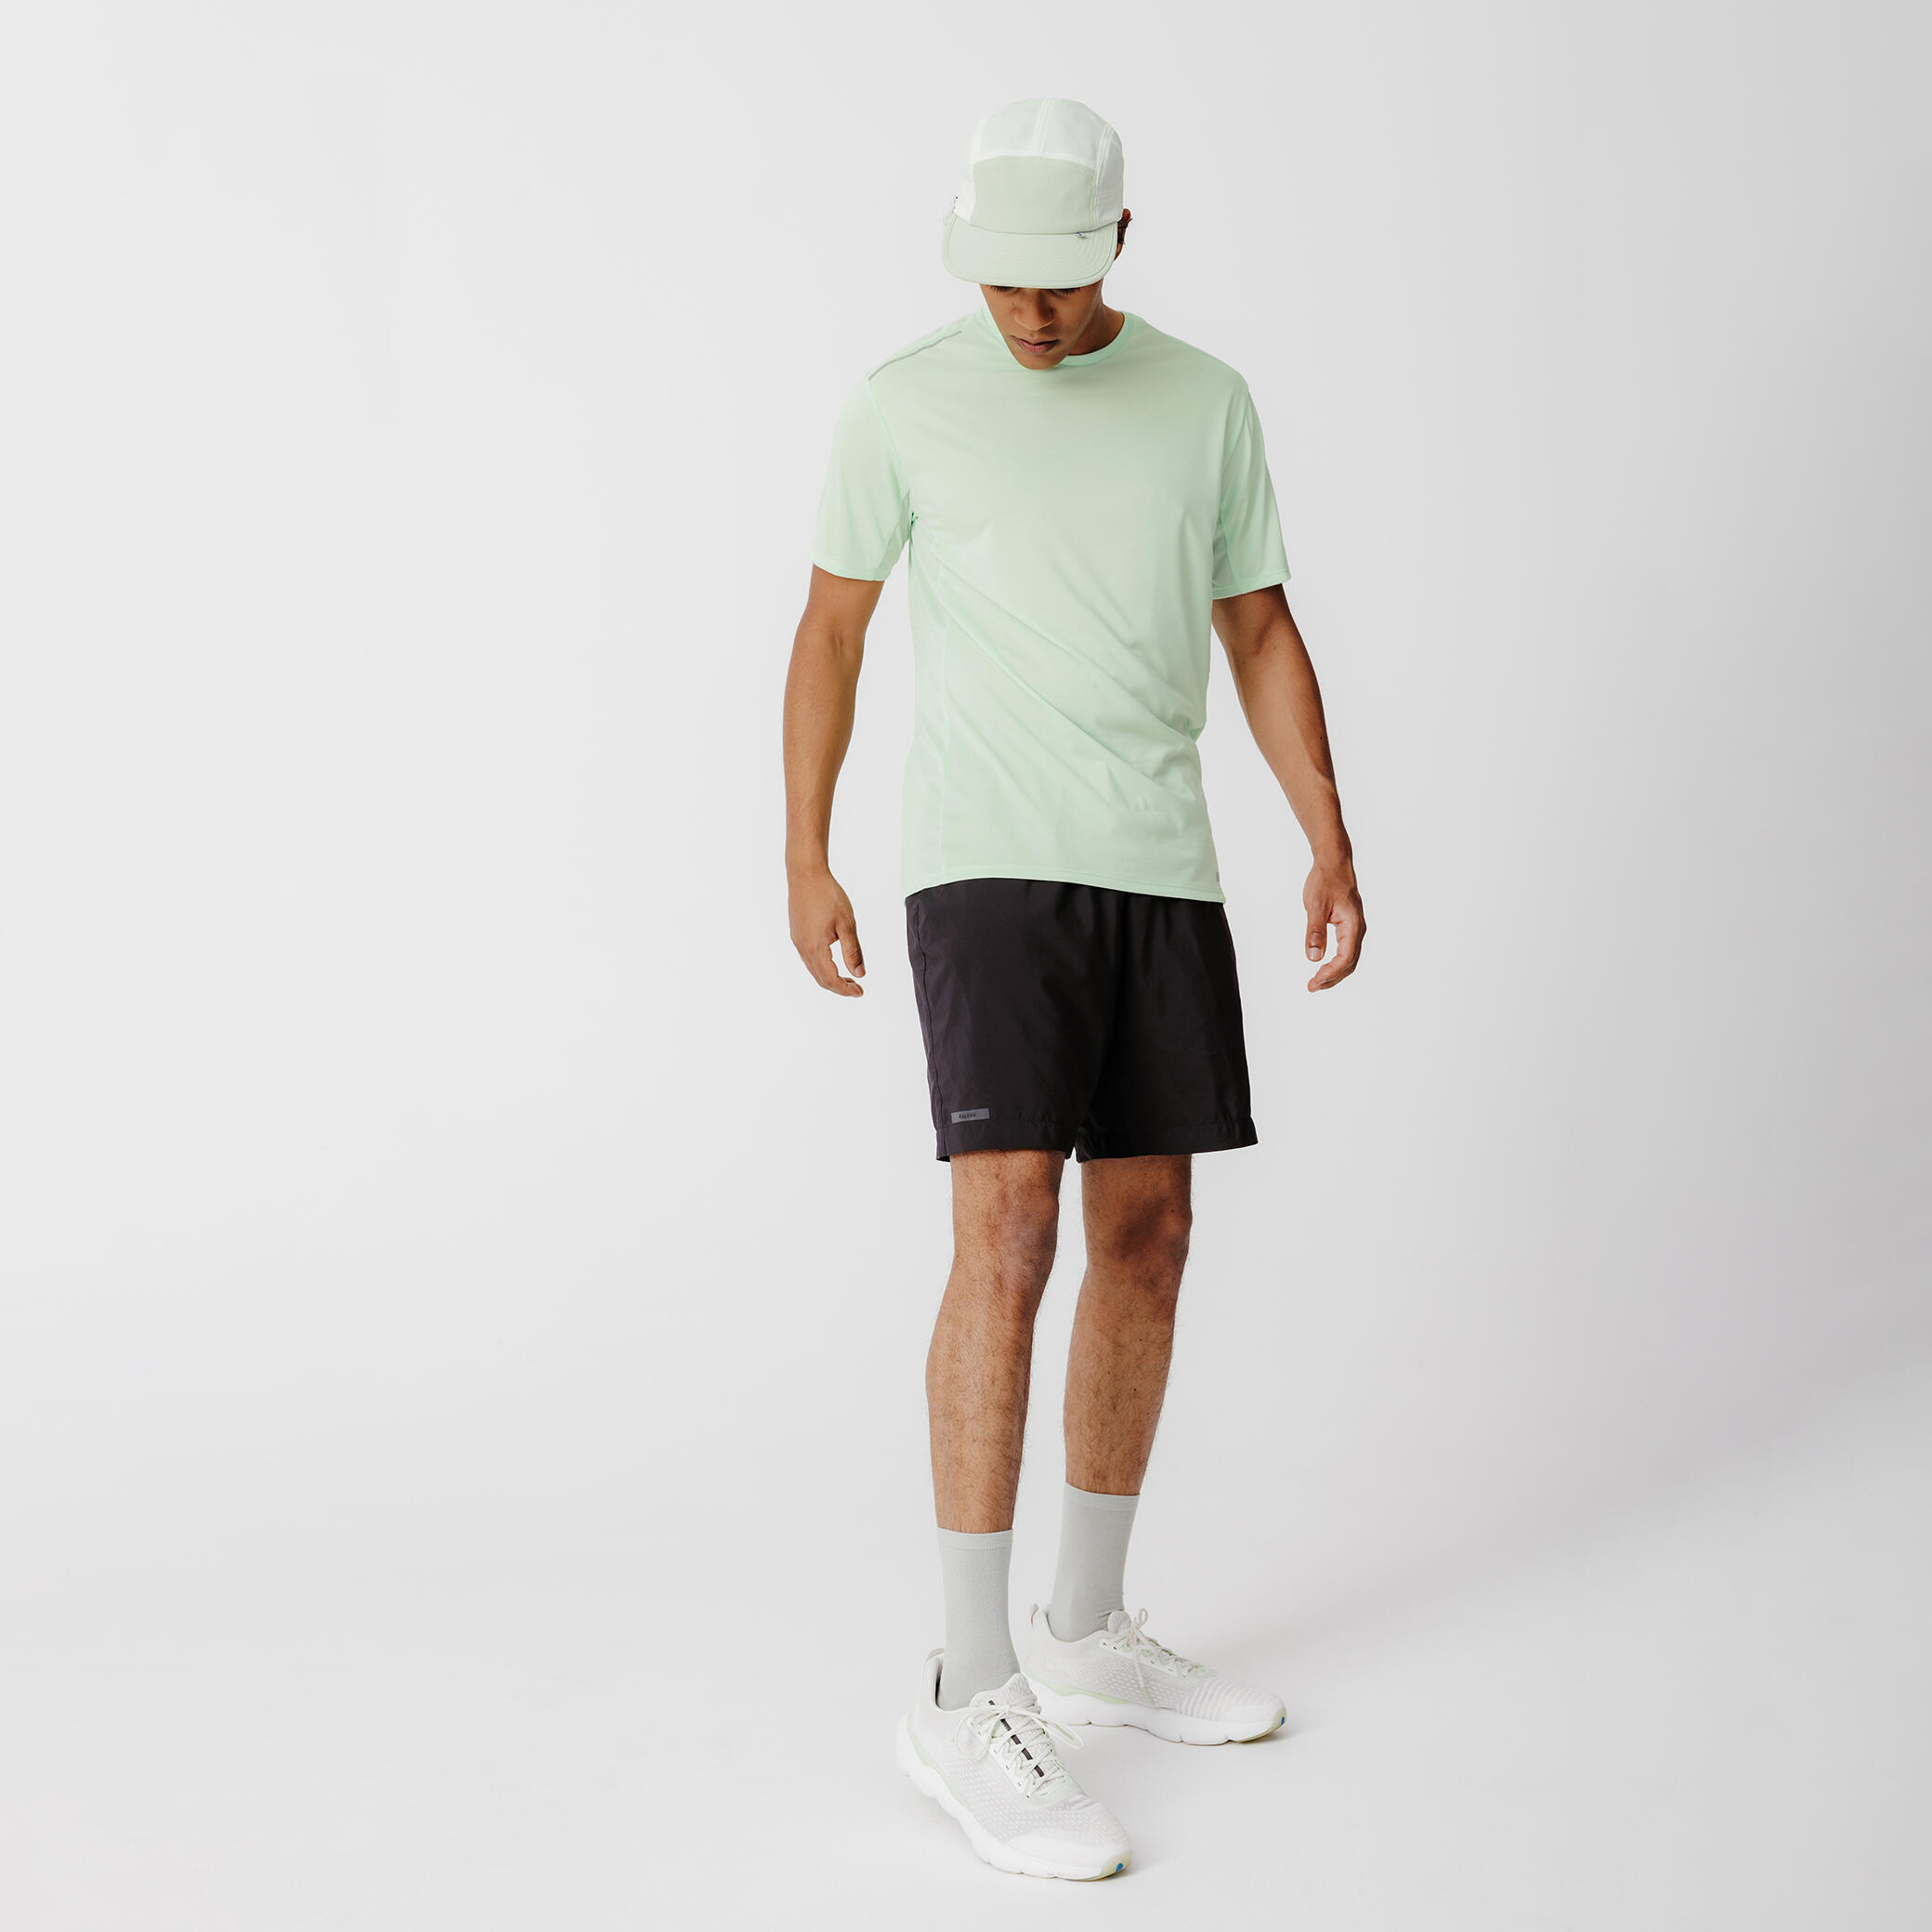 Dry+ Men's Running Breathable T-shirt - neon green 2/6